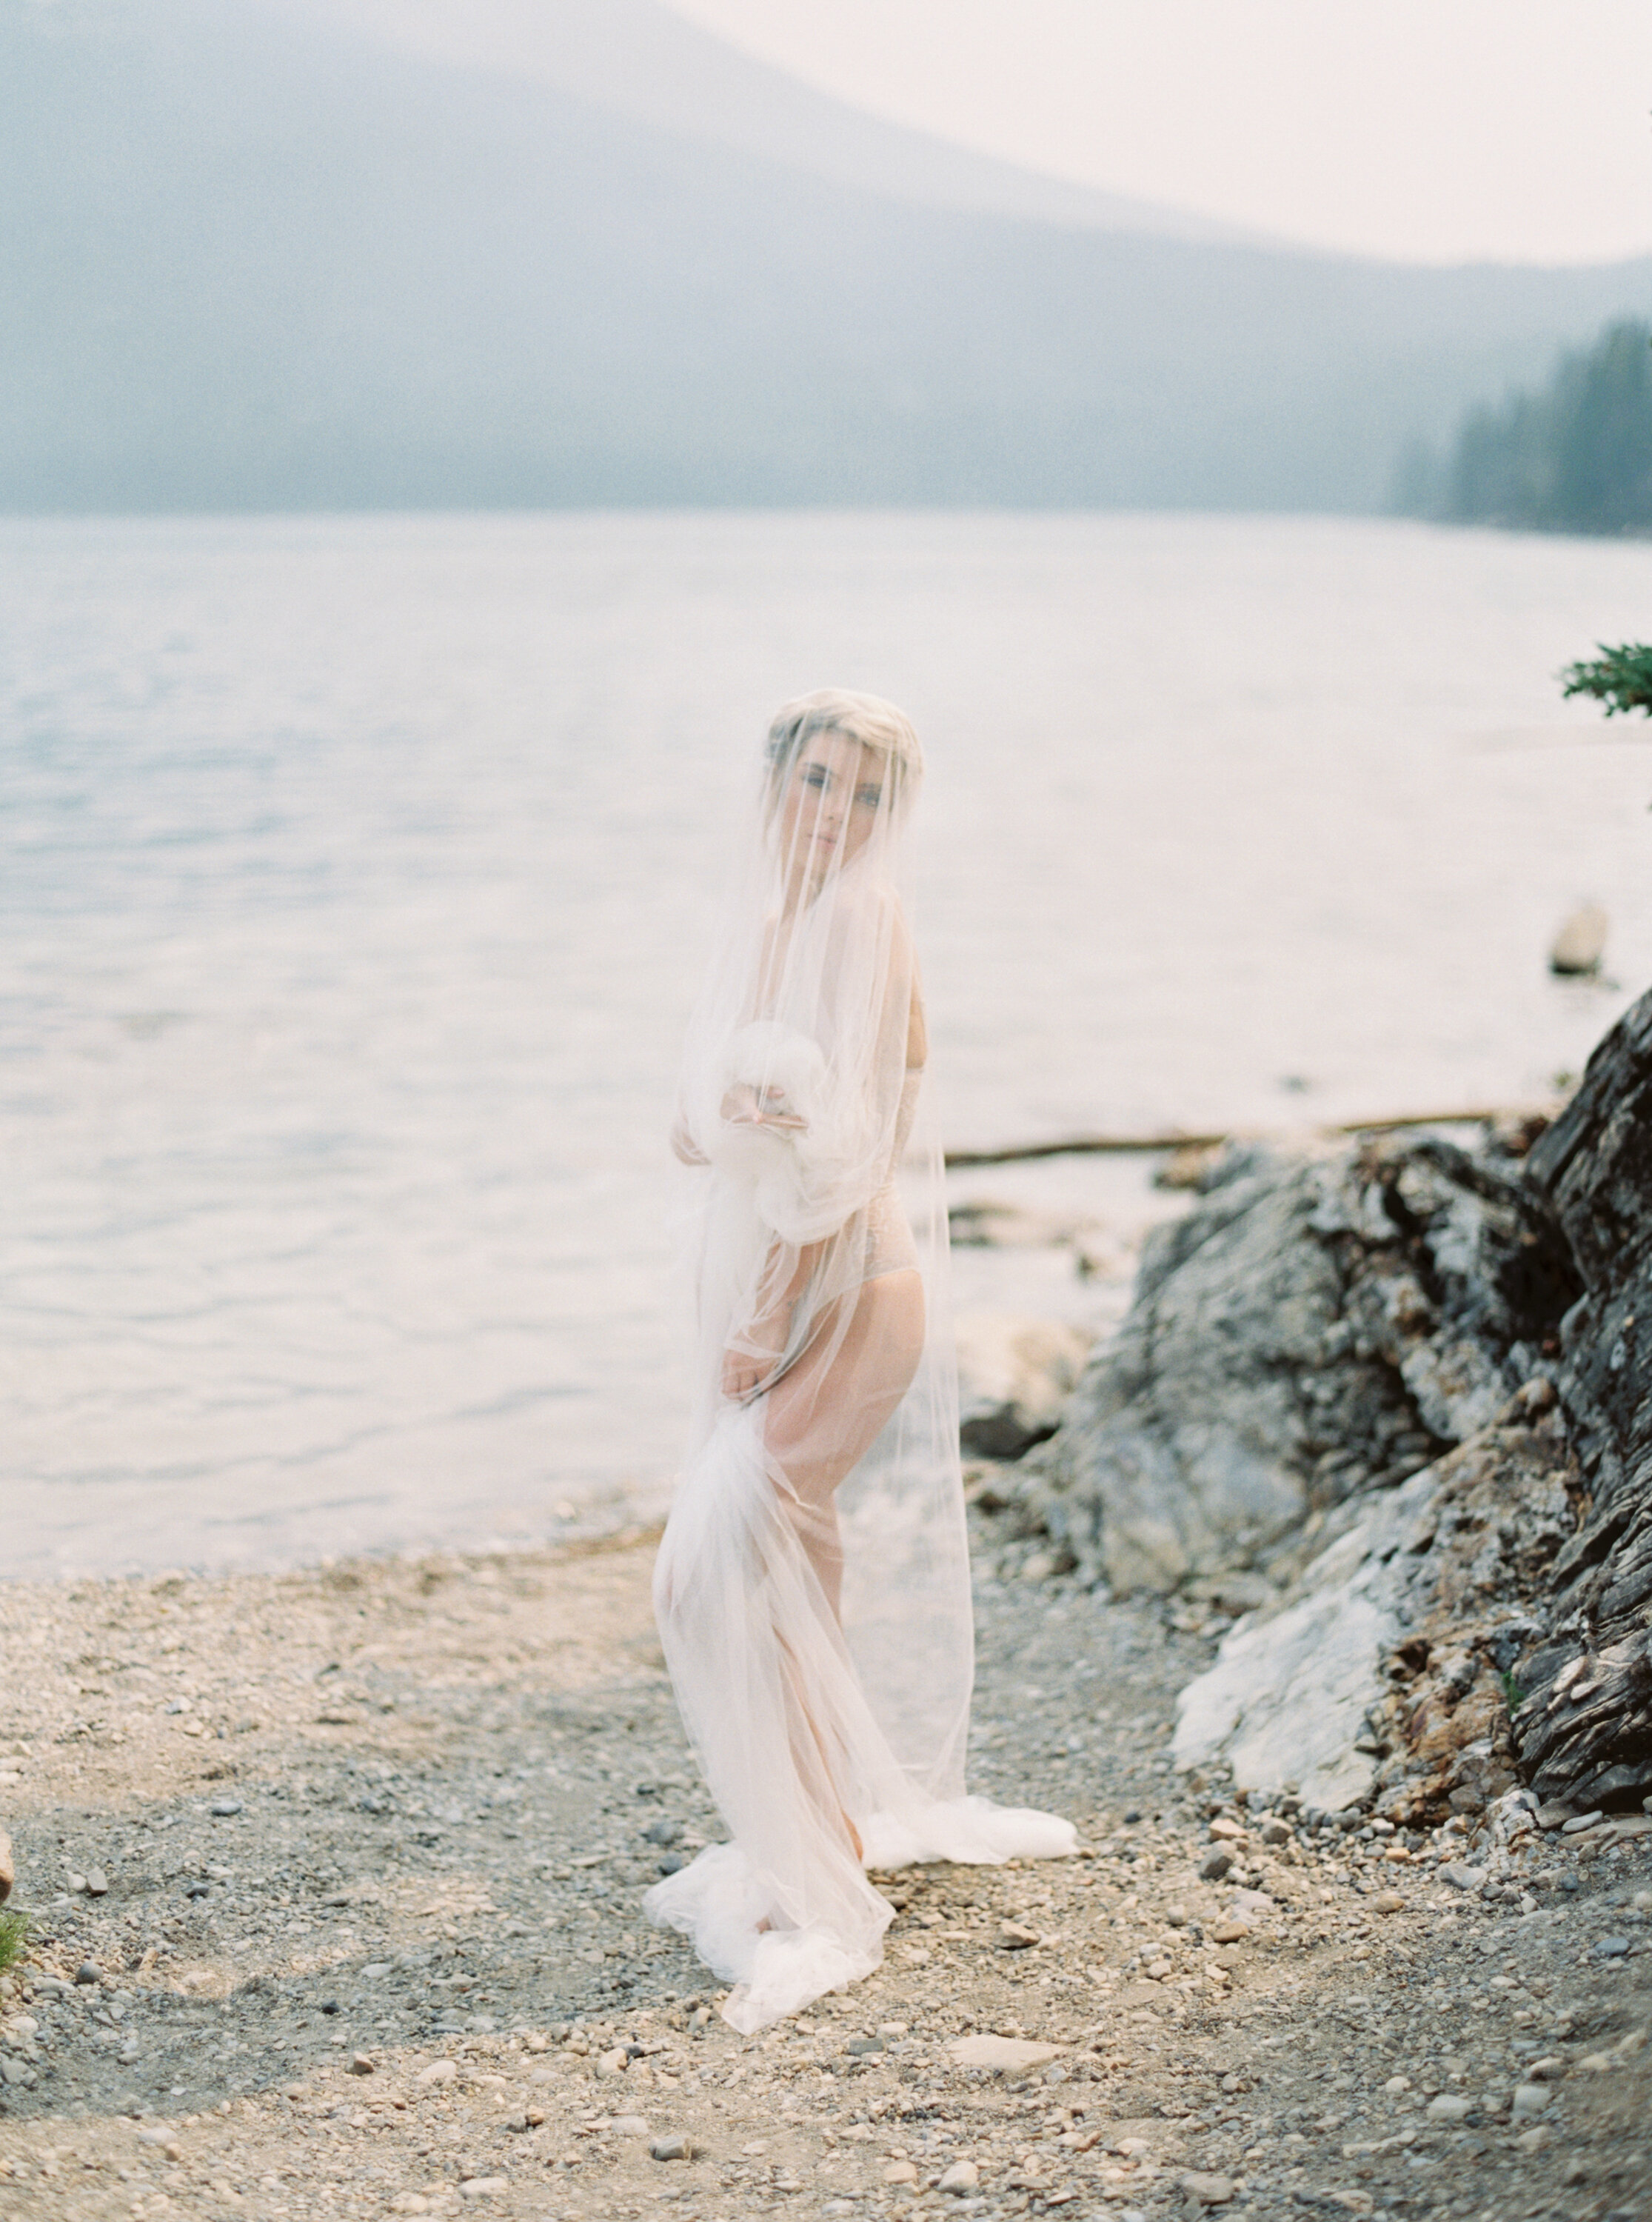 Blushing Banff Bridal Inspiration in the Rockies / Wedding Inspiration on the Bronte Bride Blog